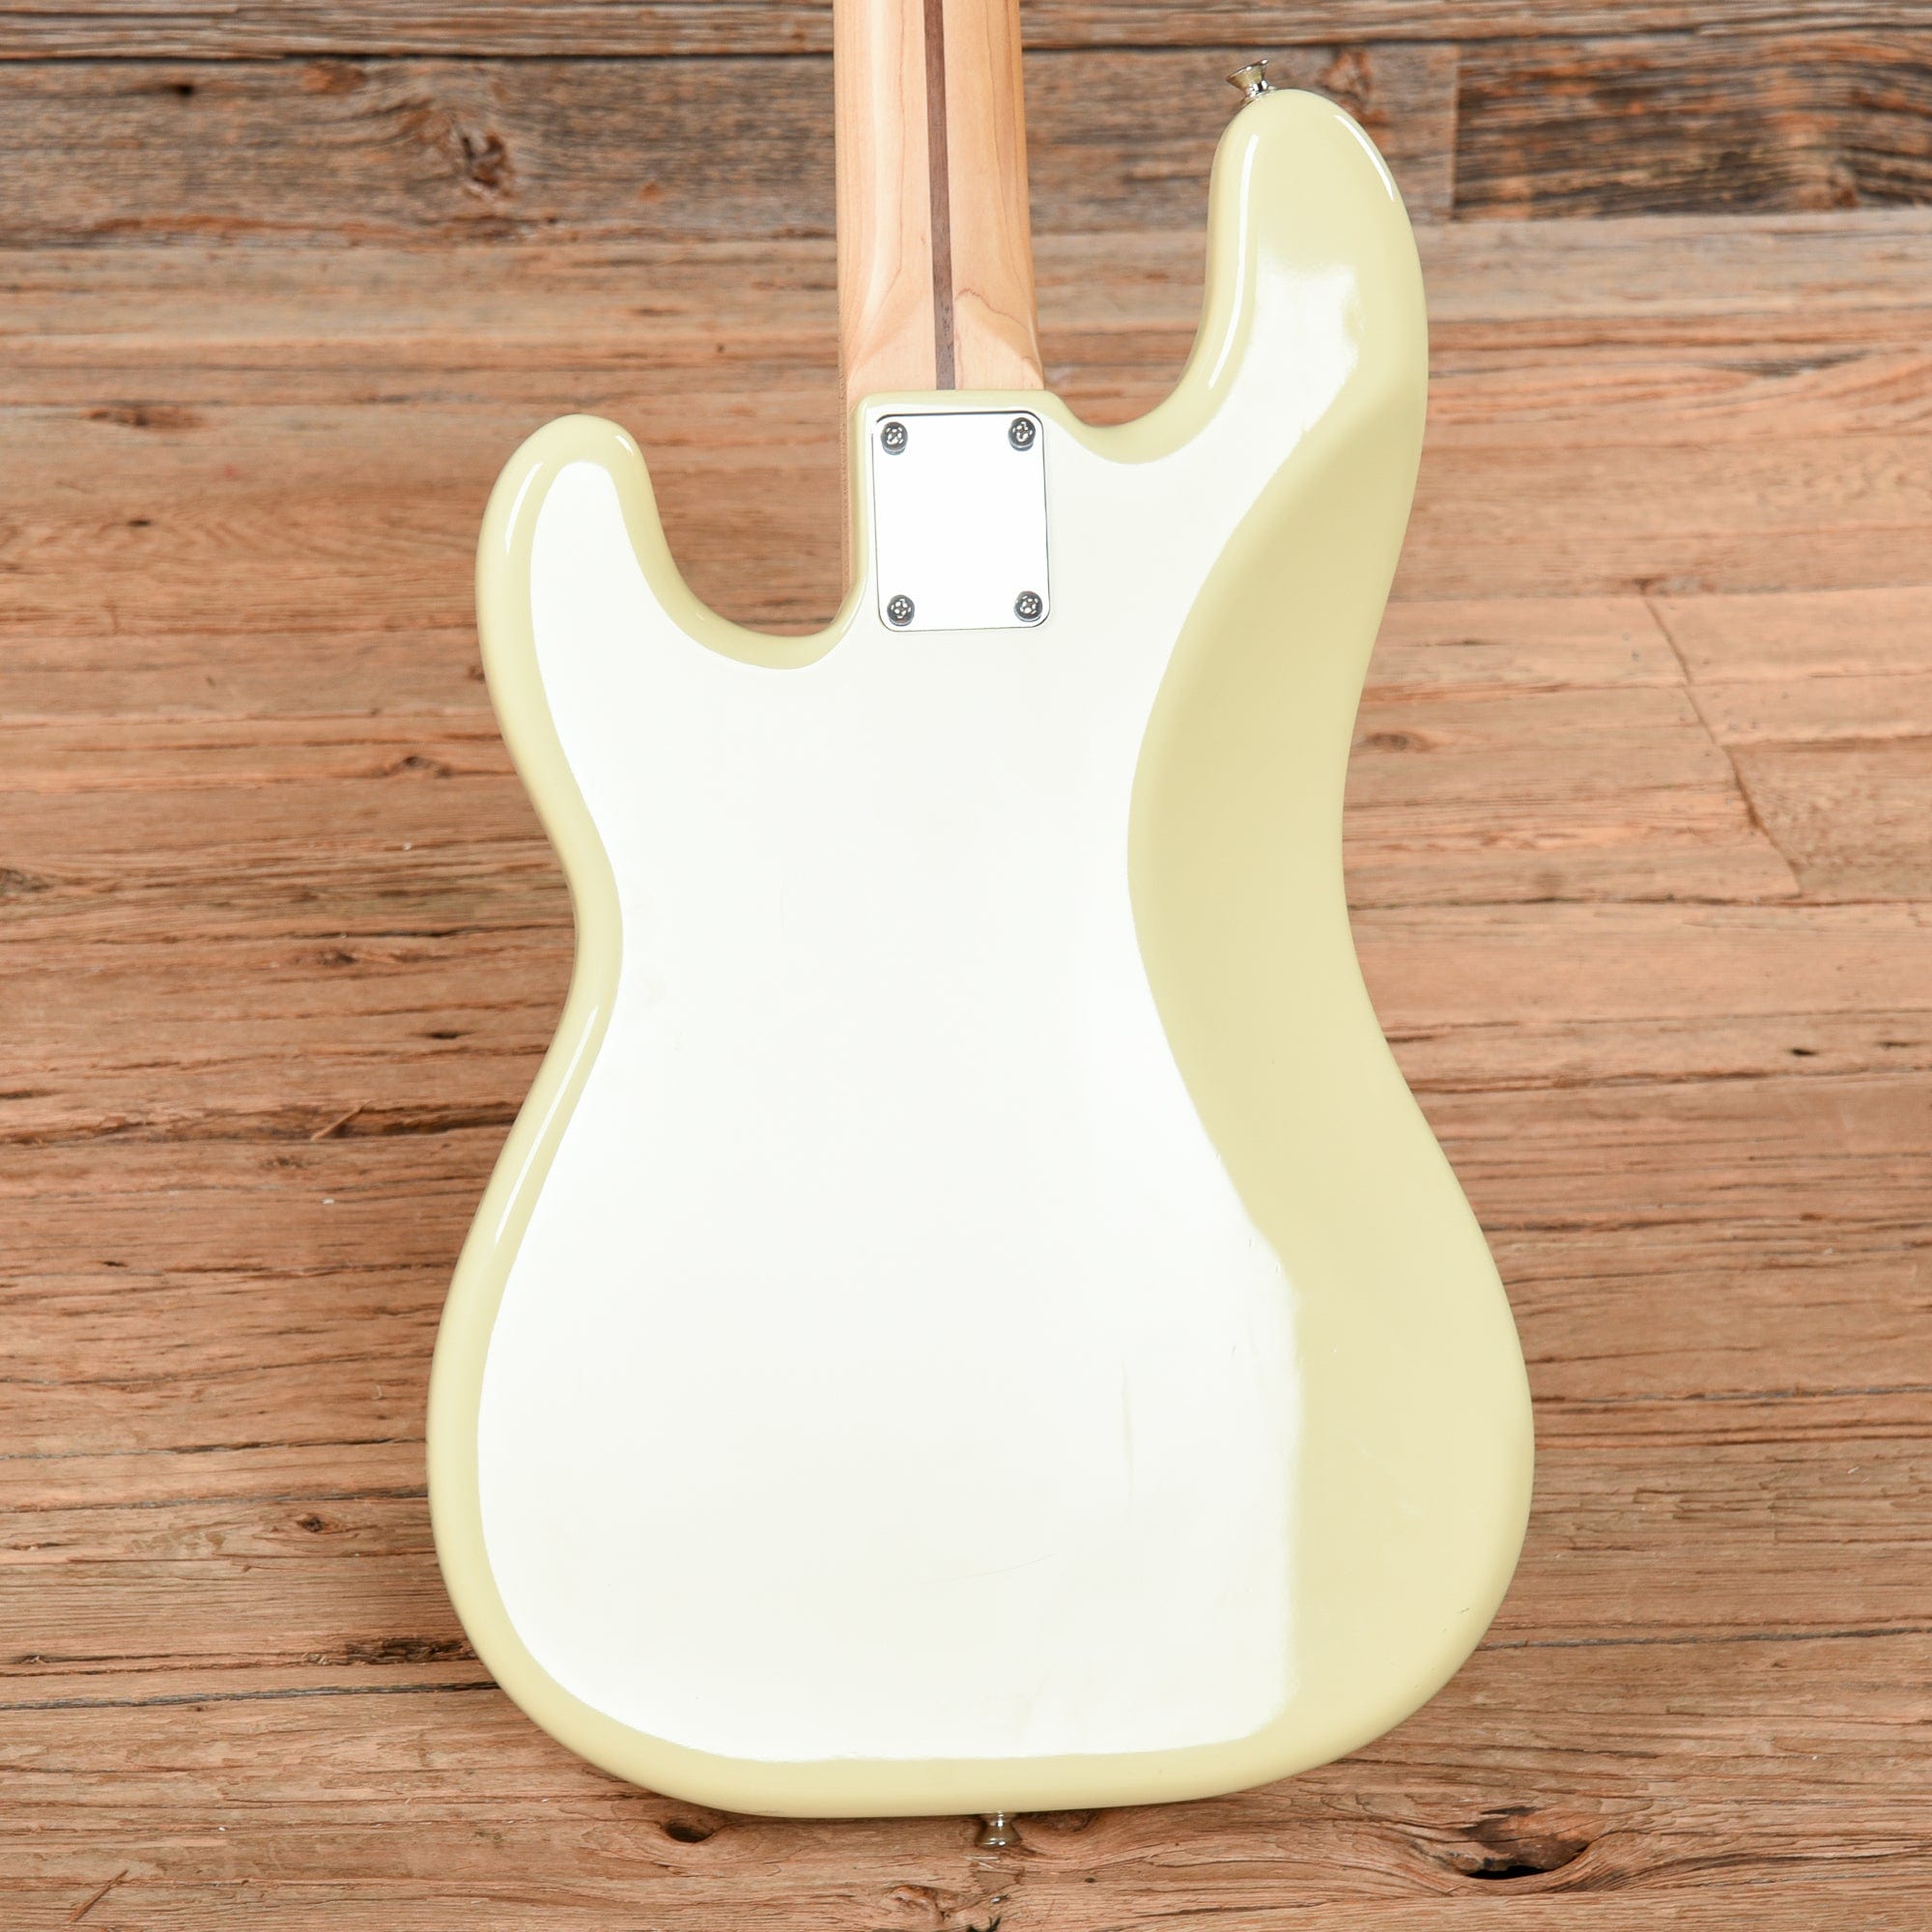 Fender PB Standard Precision Bass White 1996 Bass Guitars / 4-String